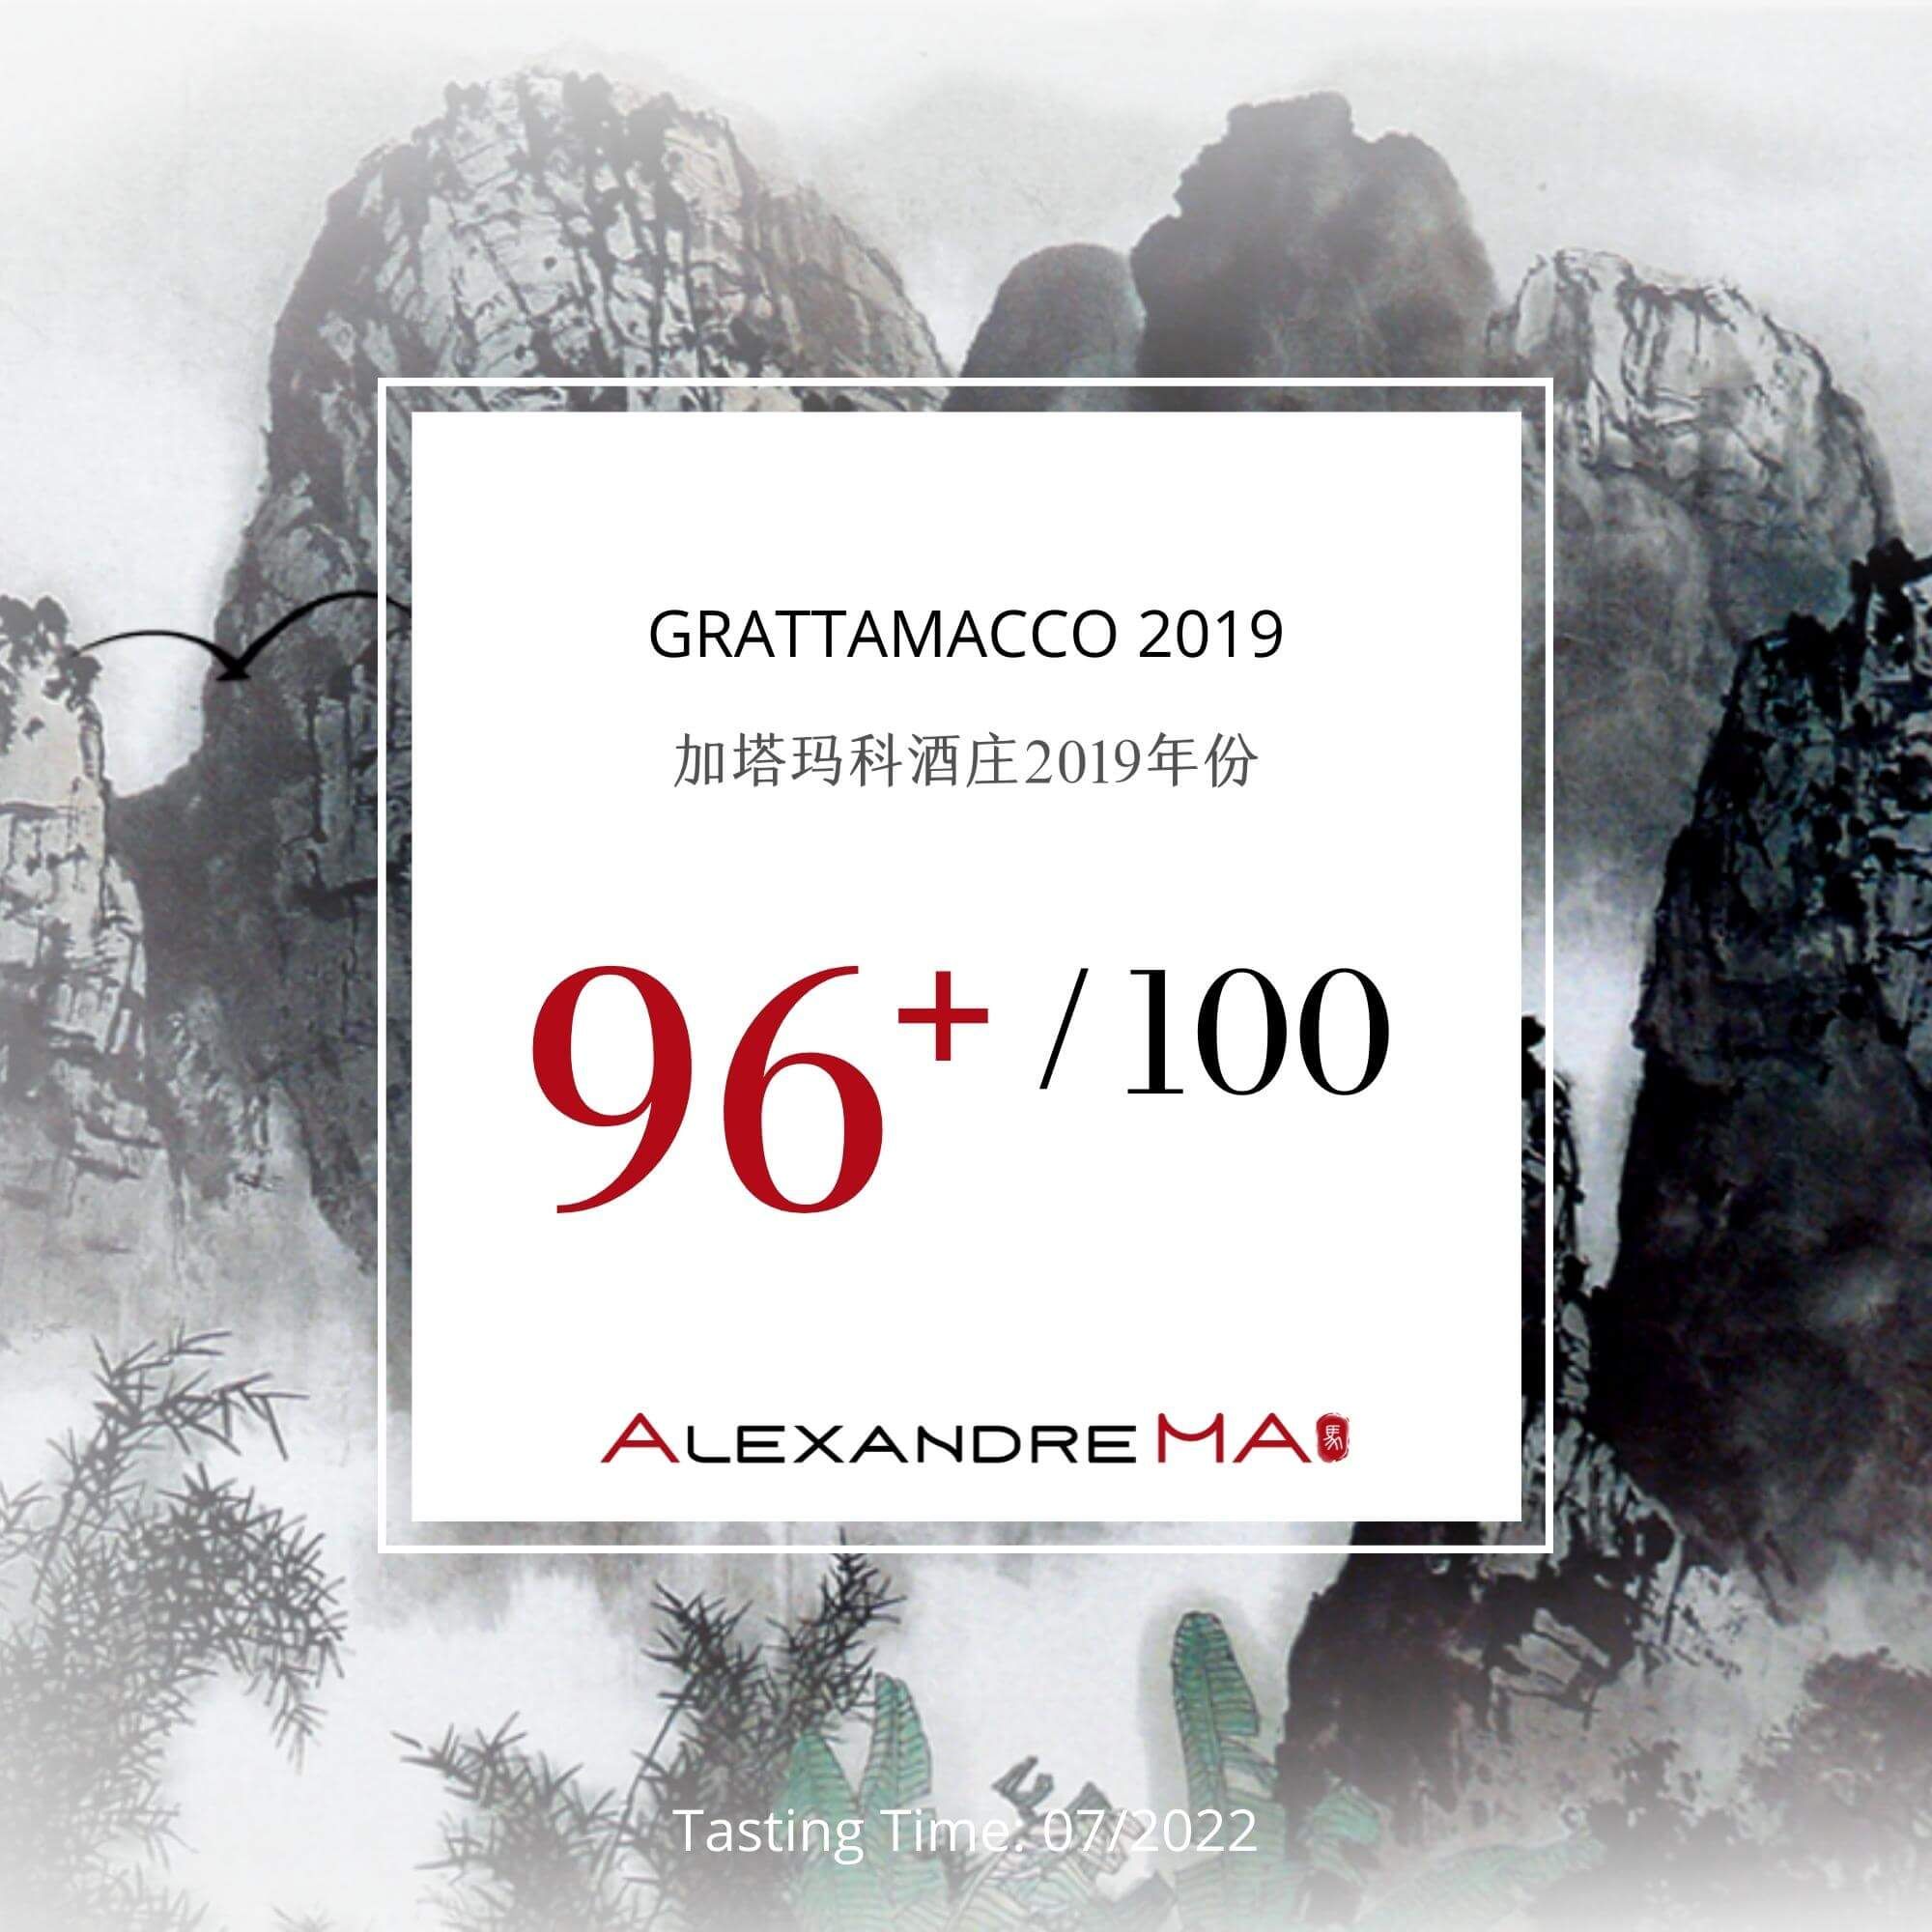 Grattamacco 2019 - Alexandre MA